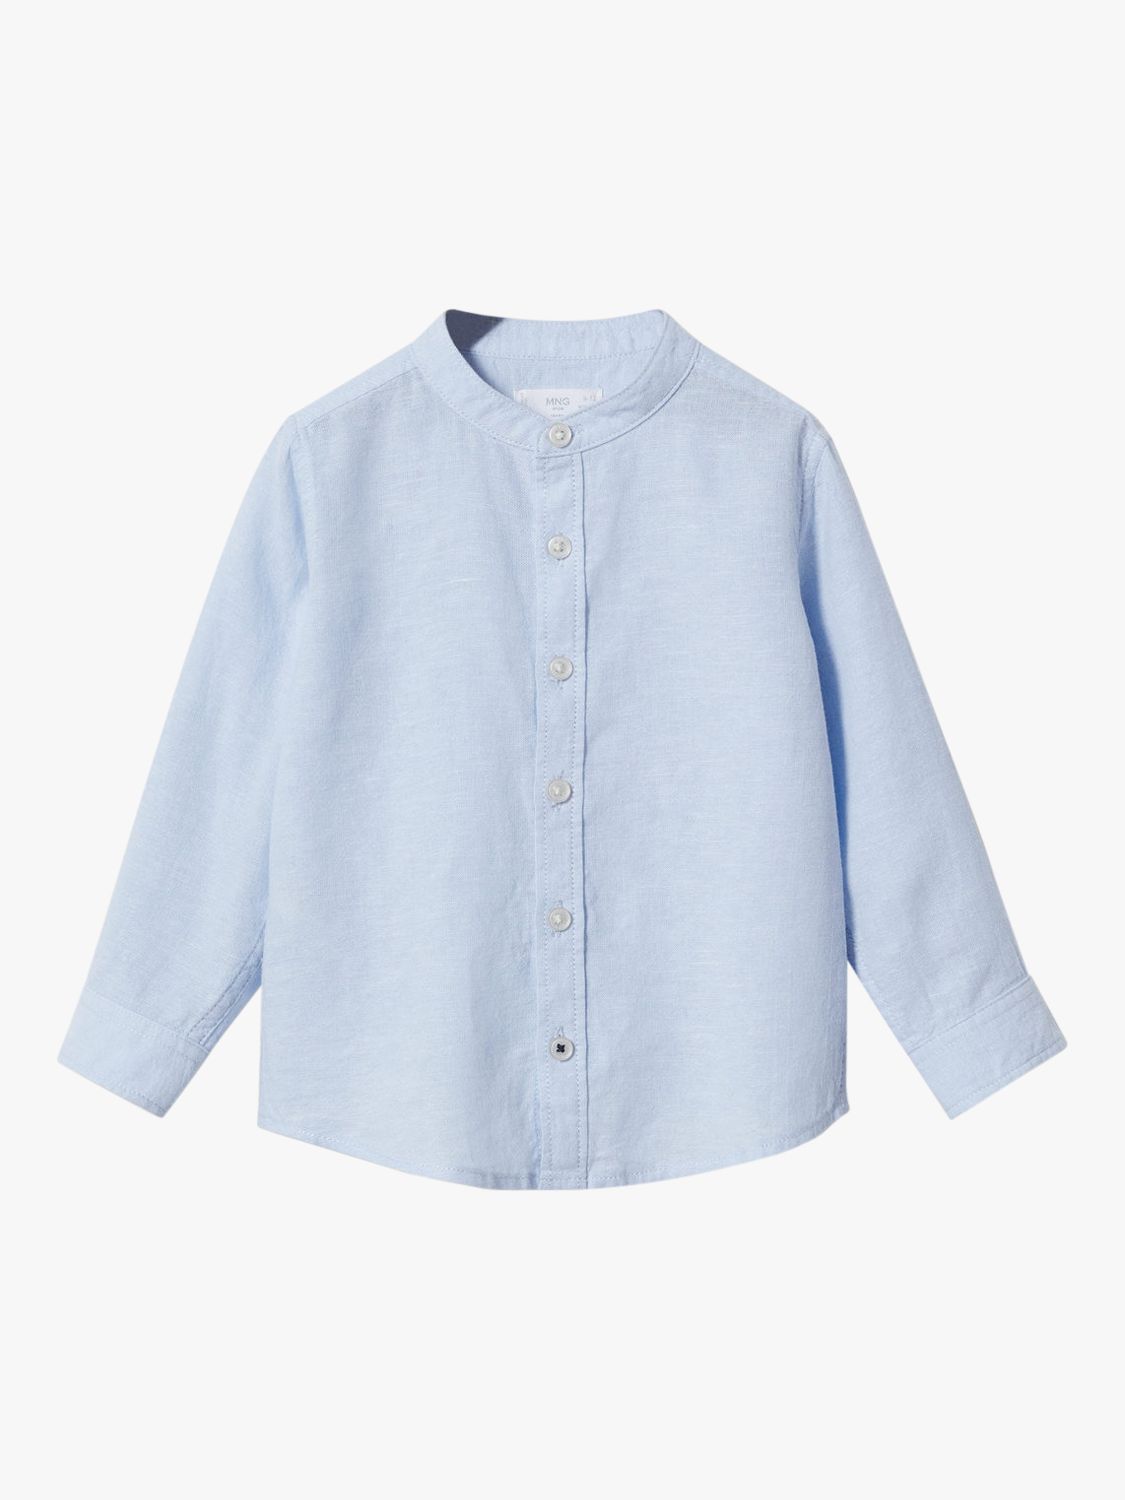 Mango Kids' Albert Long Sleeve Shirt, Pastel Blue